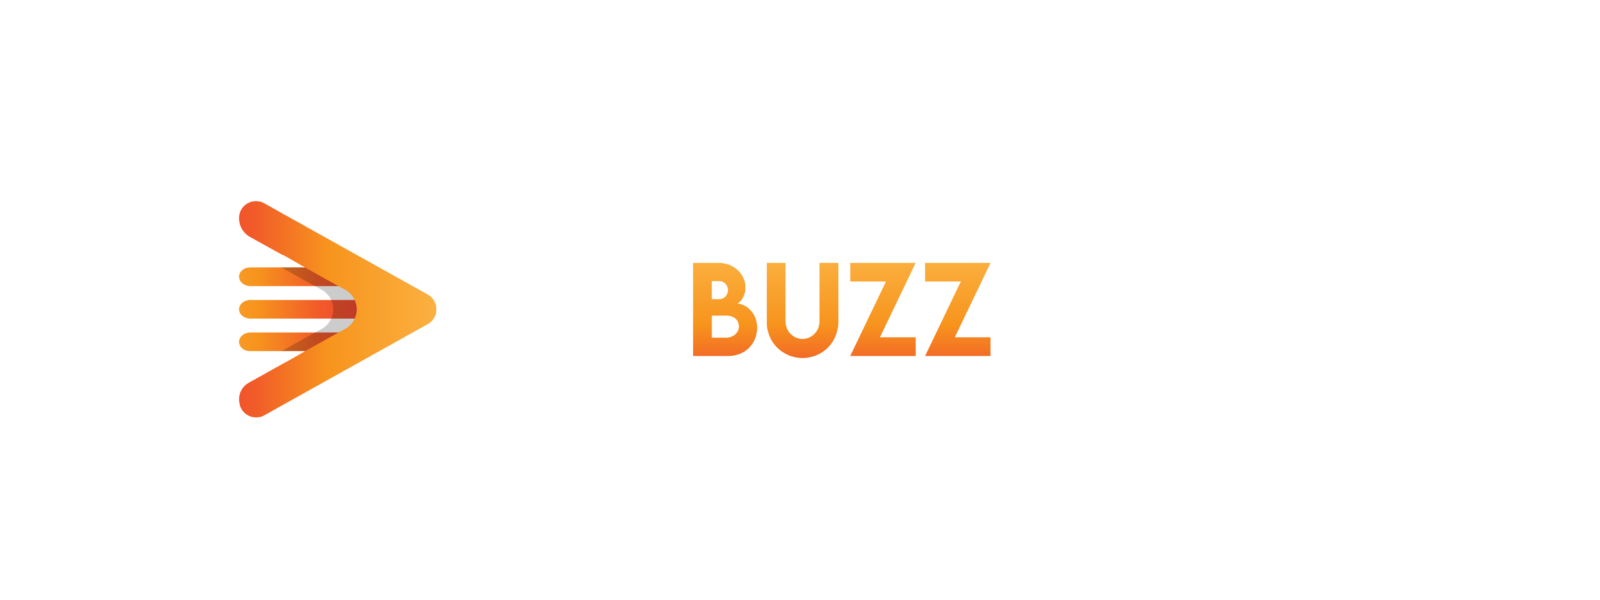 AdBuzzDaily.com